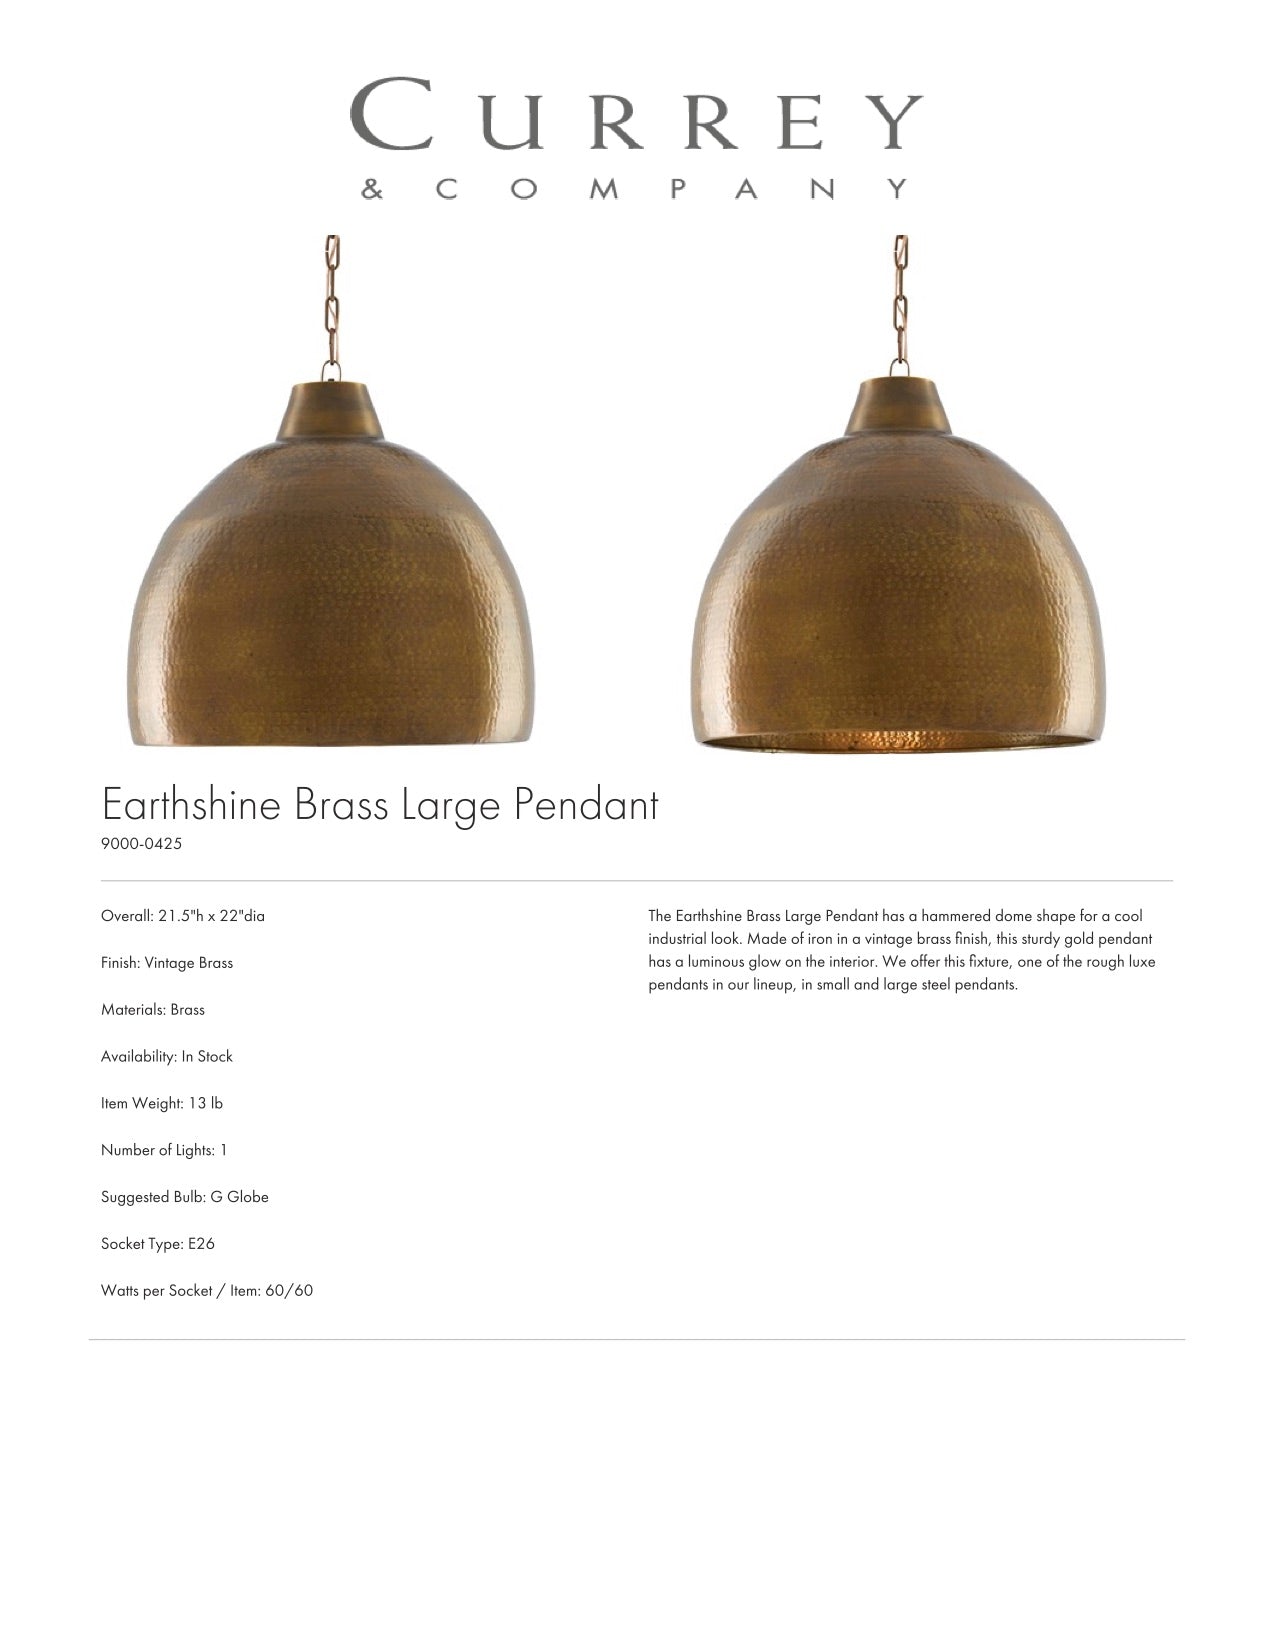 Currey & Company Earthshine Brass Large Pendant Tearsheet